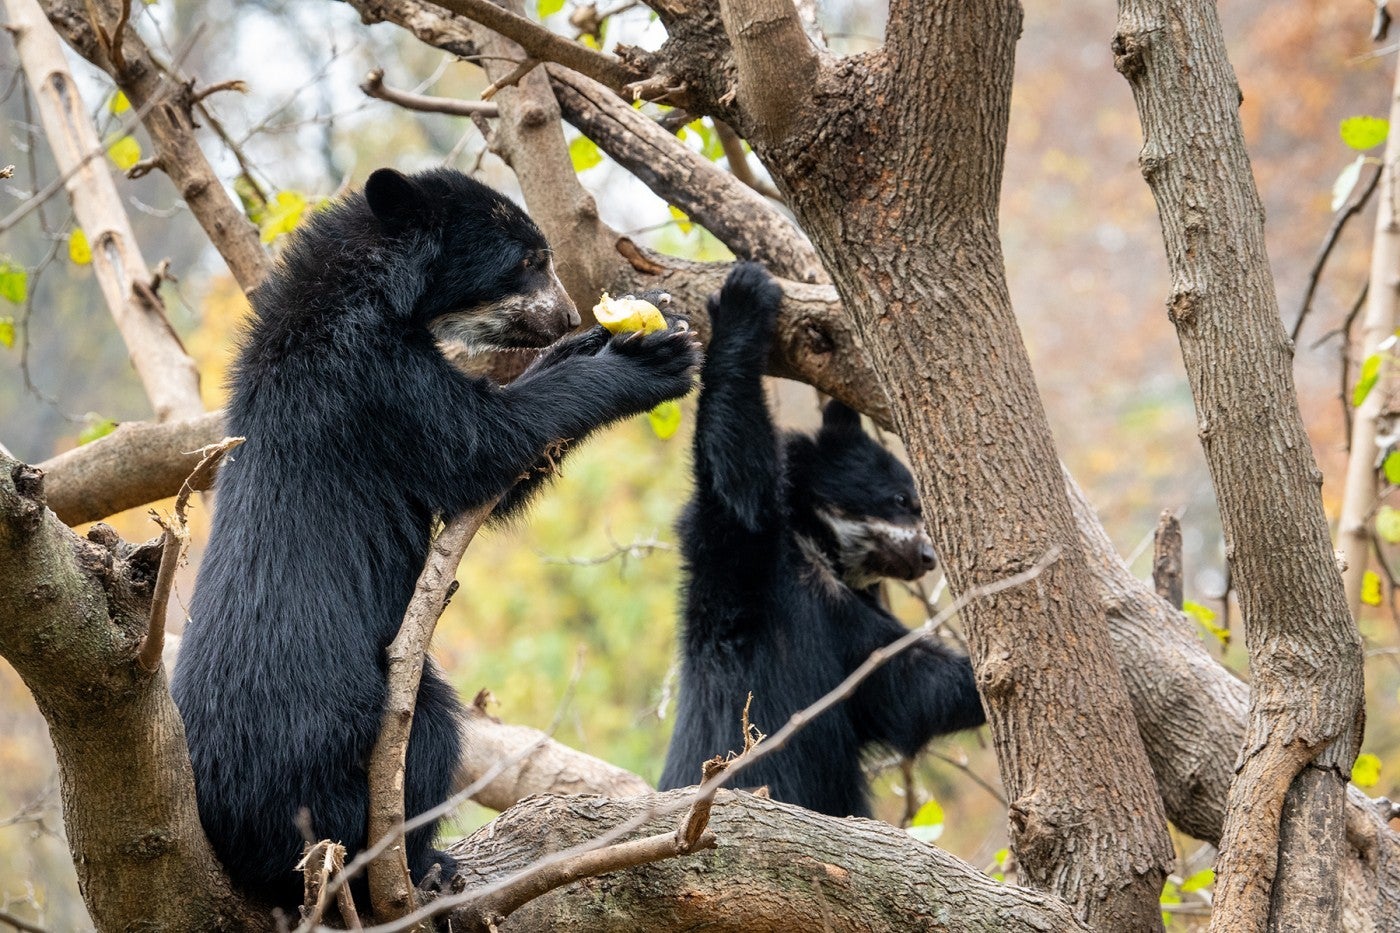 Andean bear cubs Ian (left) and Sean (right) climb a tree.